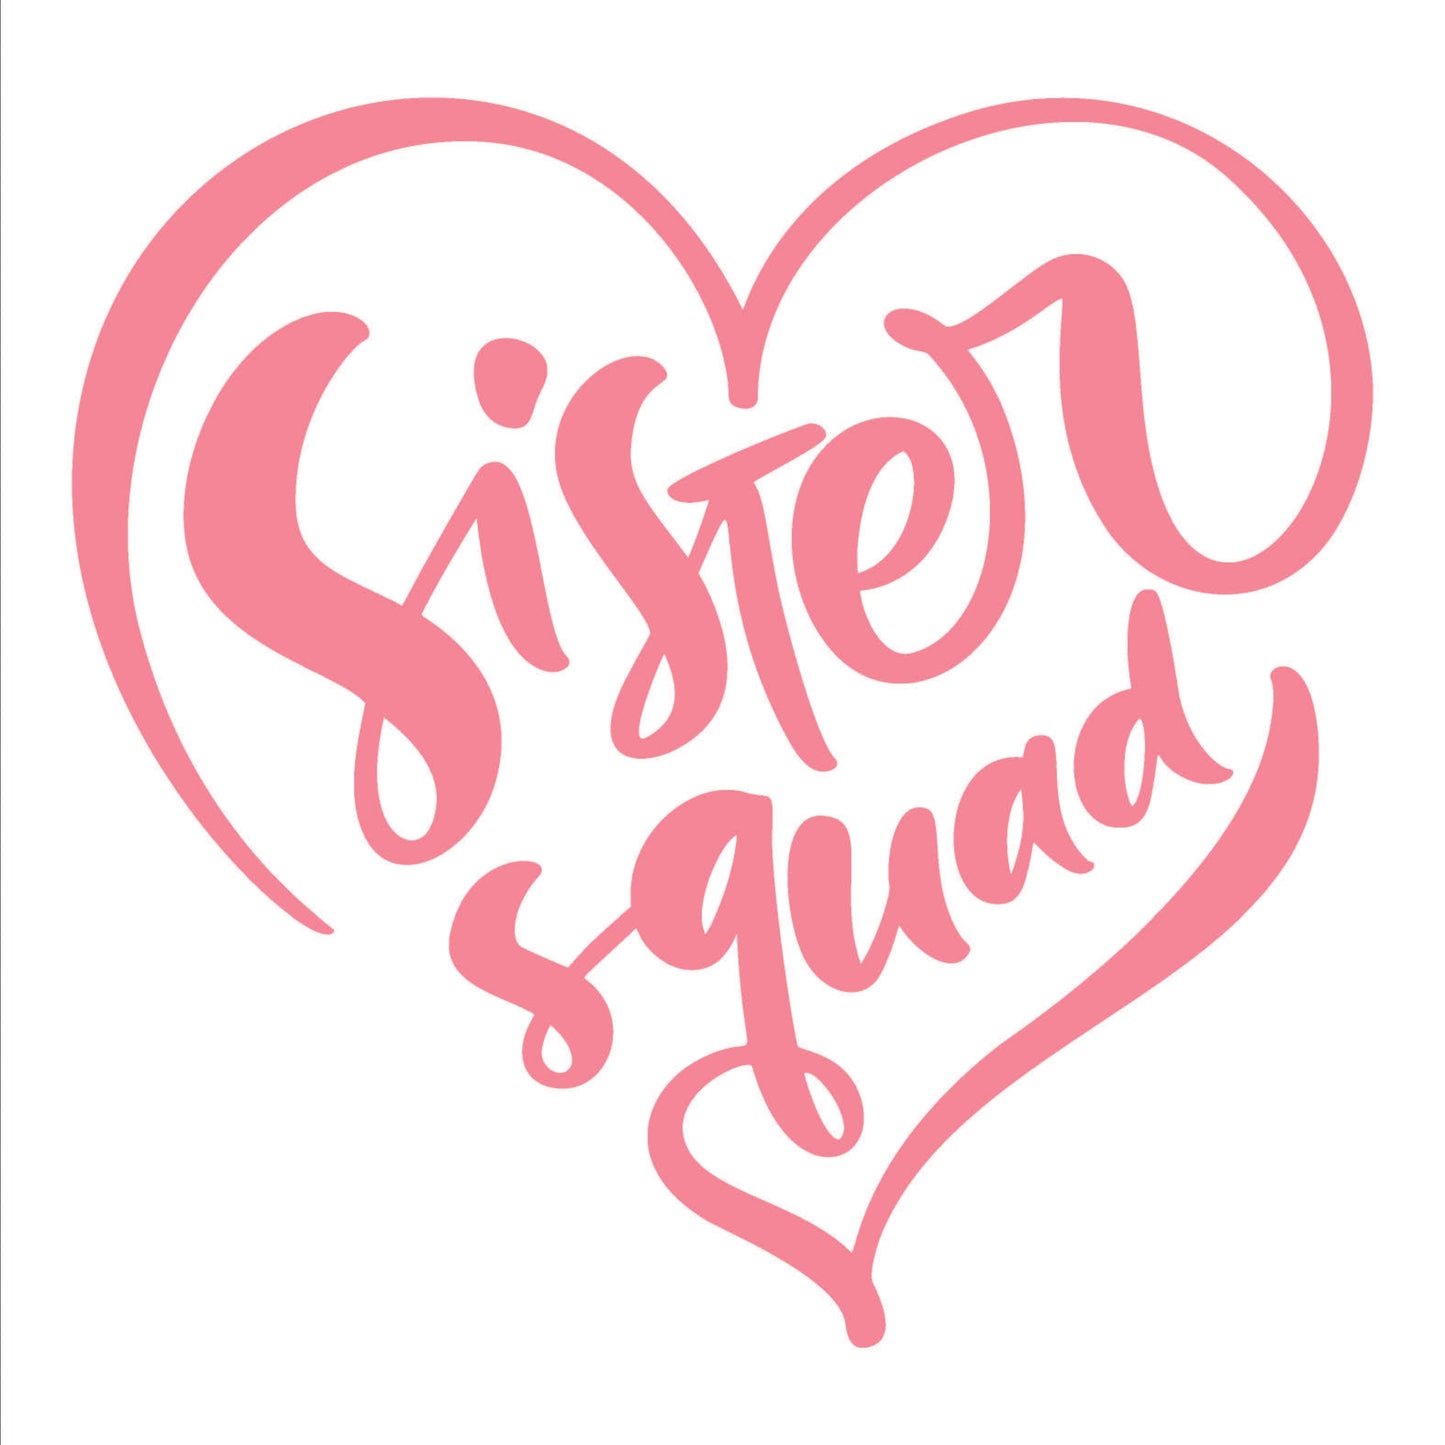 Sister Squad